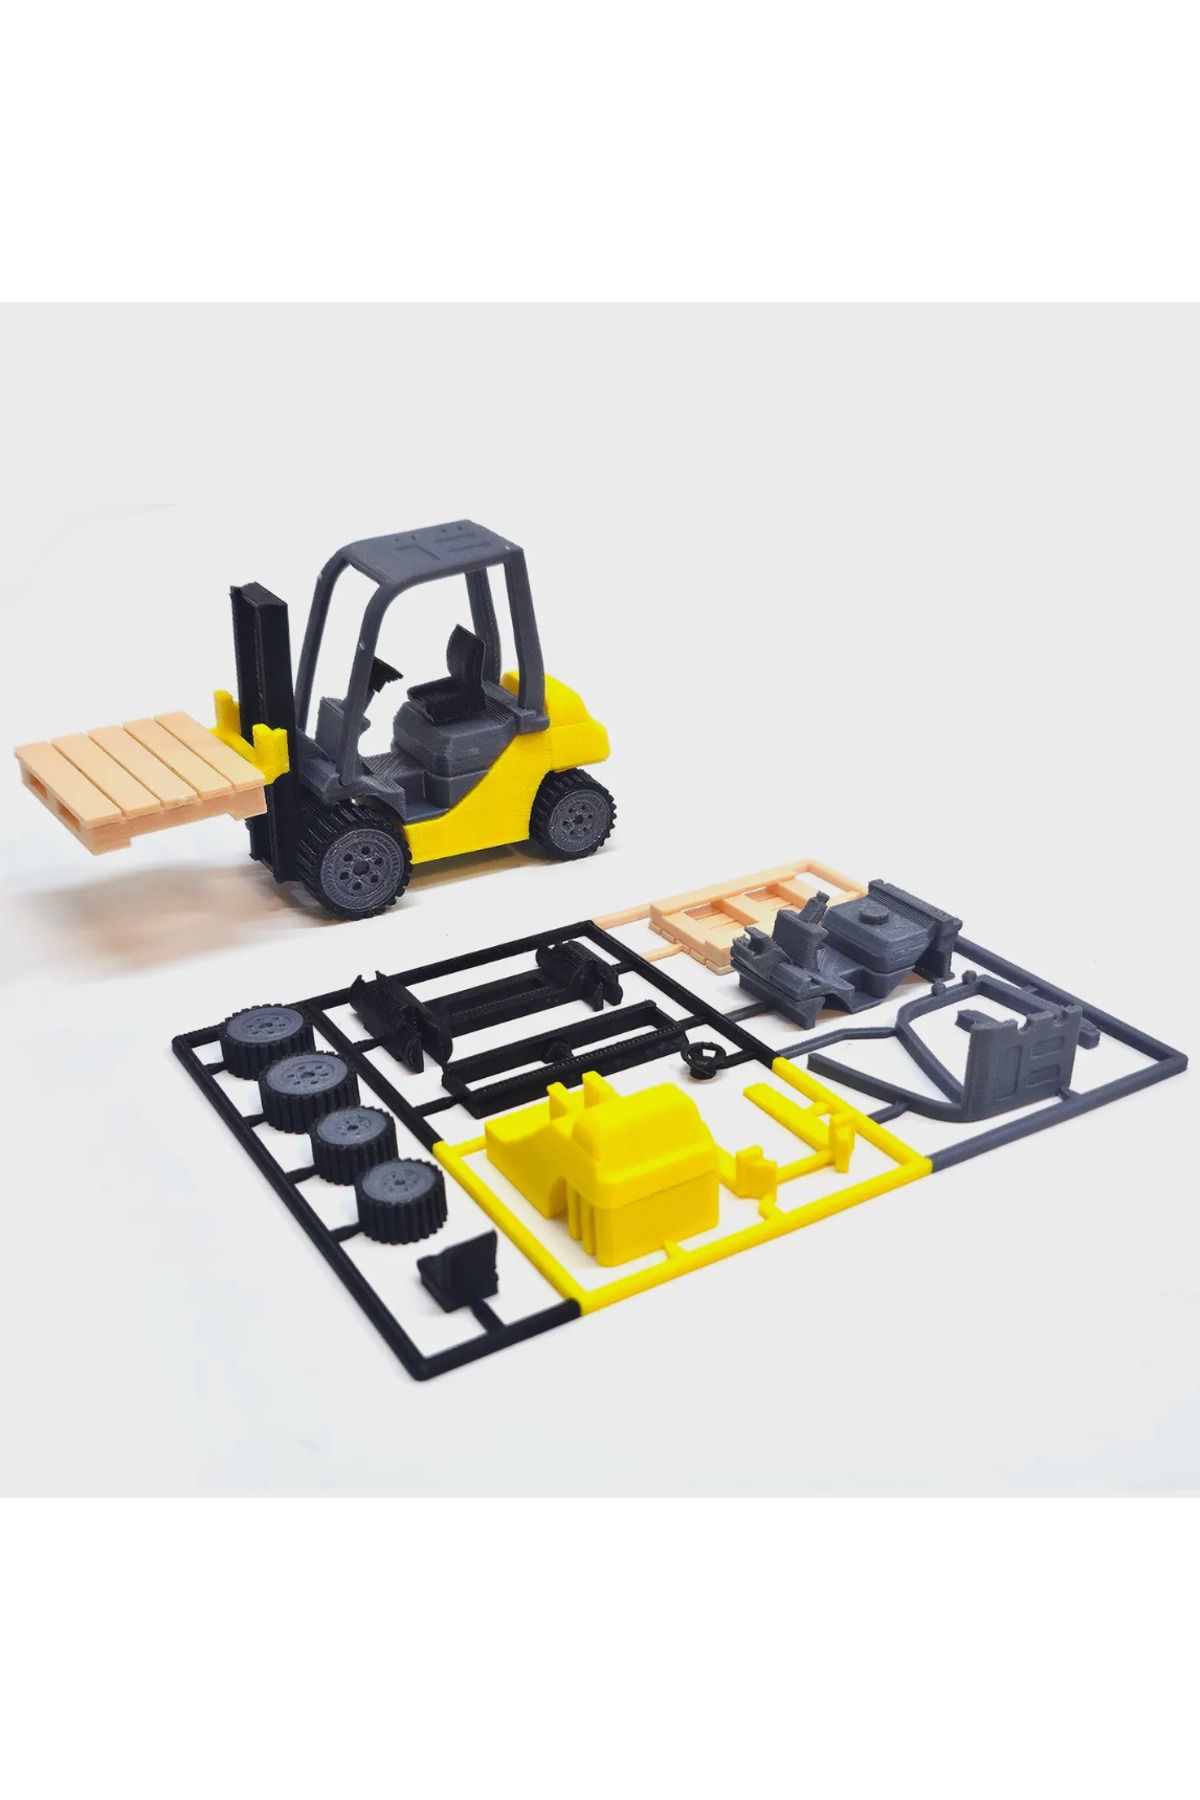 buxeco Forklift Kit Card Demonte 1 Adet